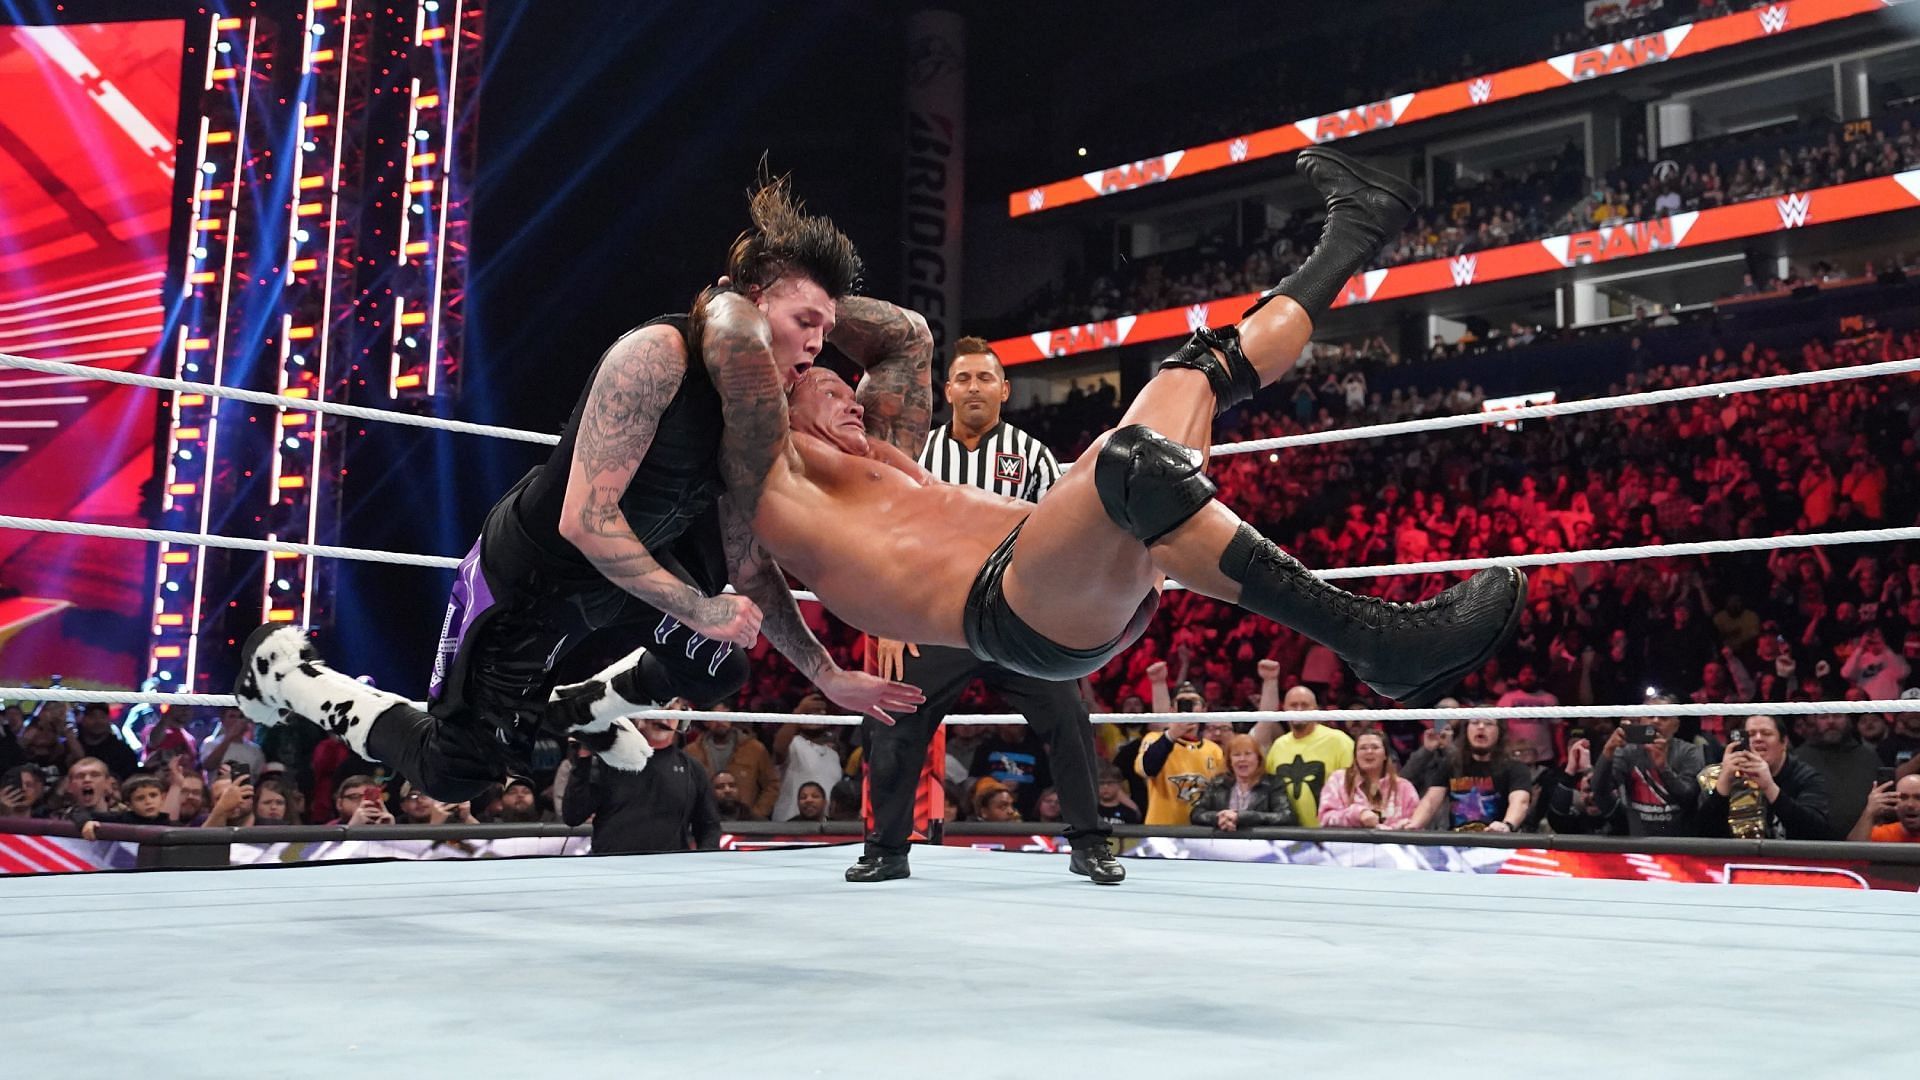 Randy Orton hitting the RKO